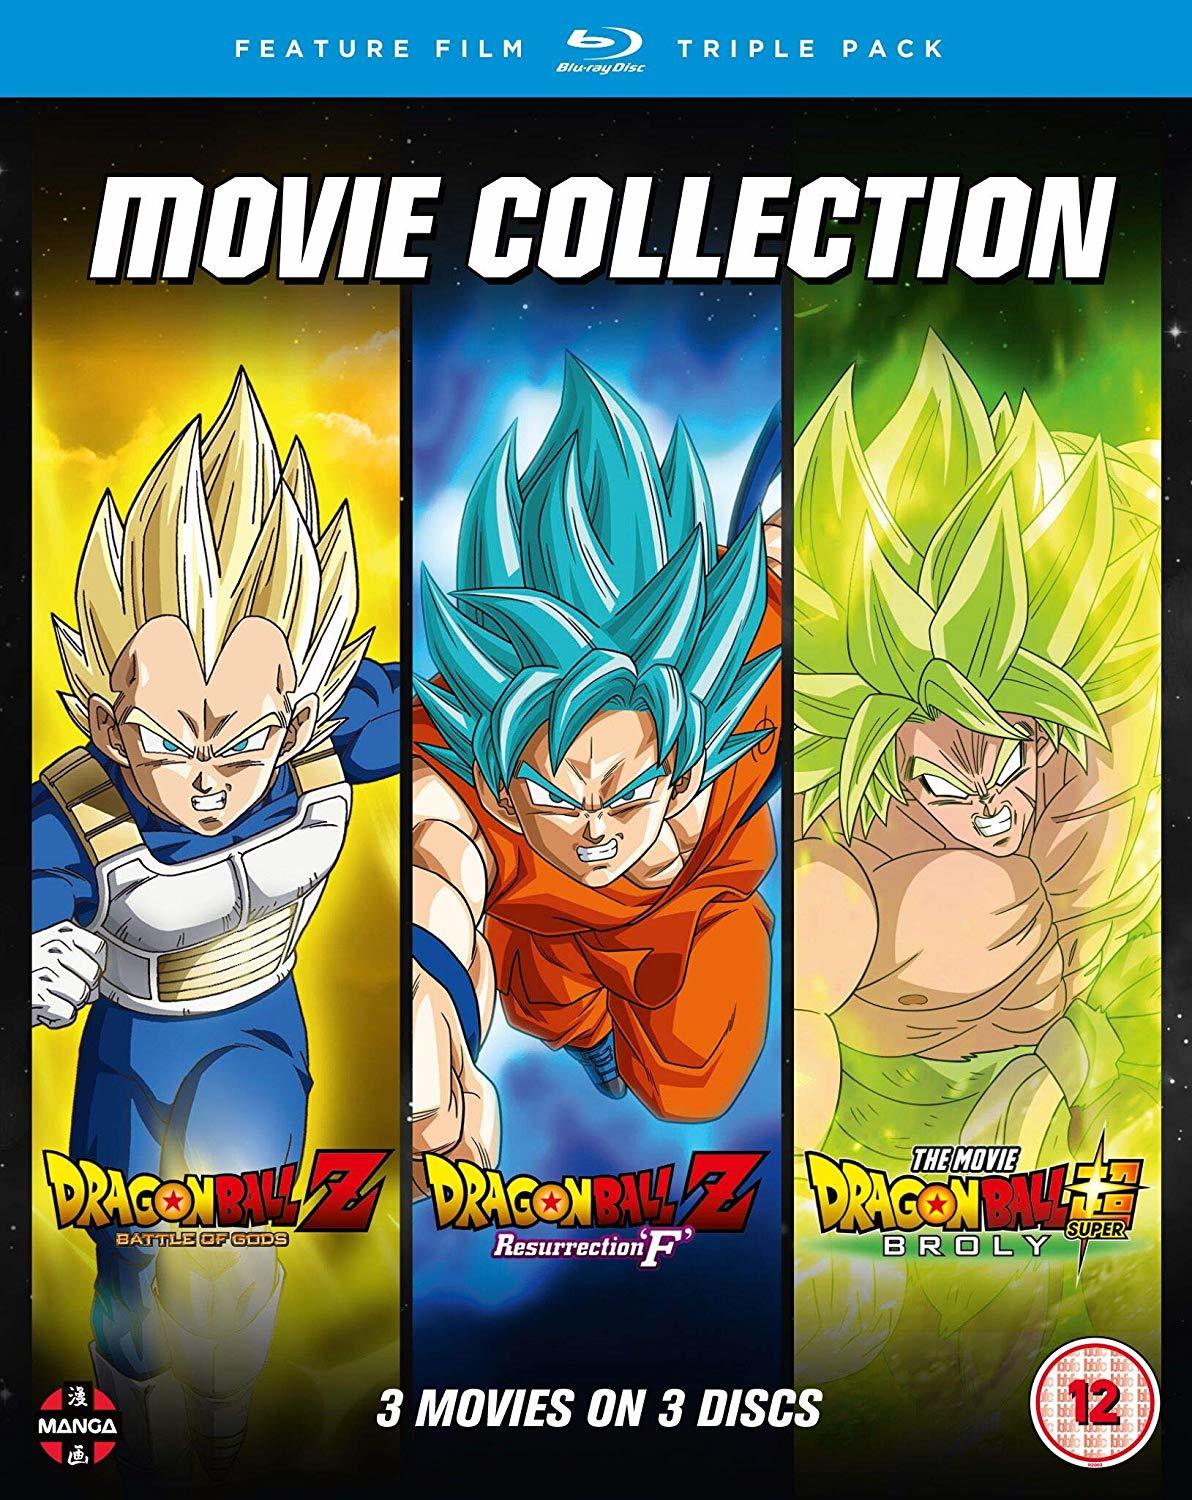 Dragon Ball Movie Trilogy Blu-ray (Battle of Gods / Resurrection F